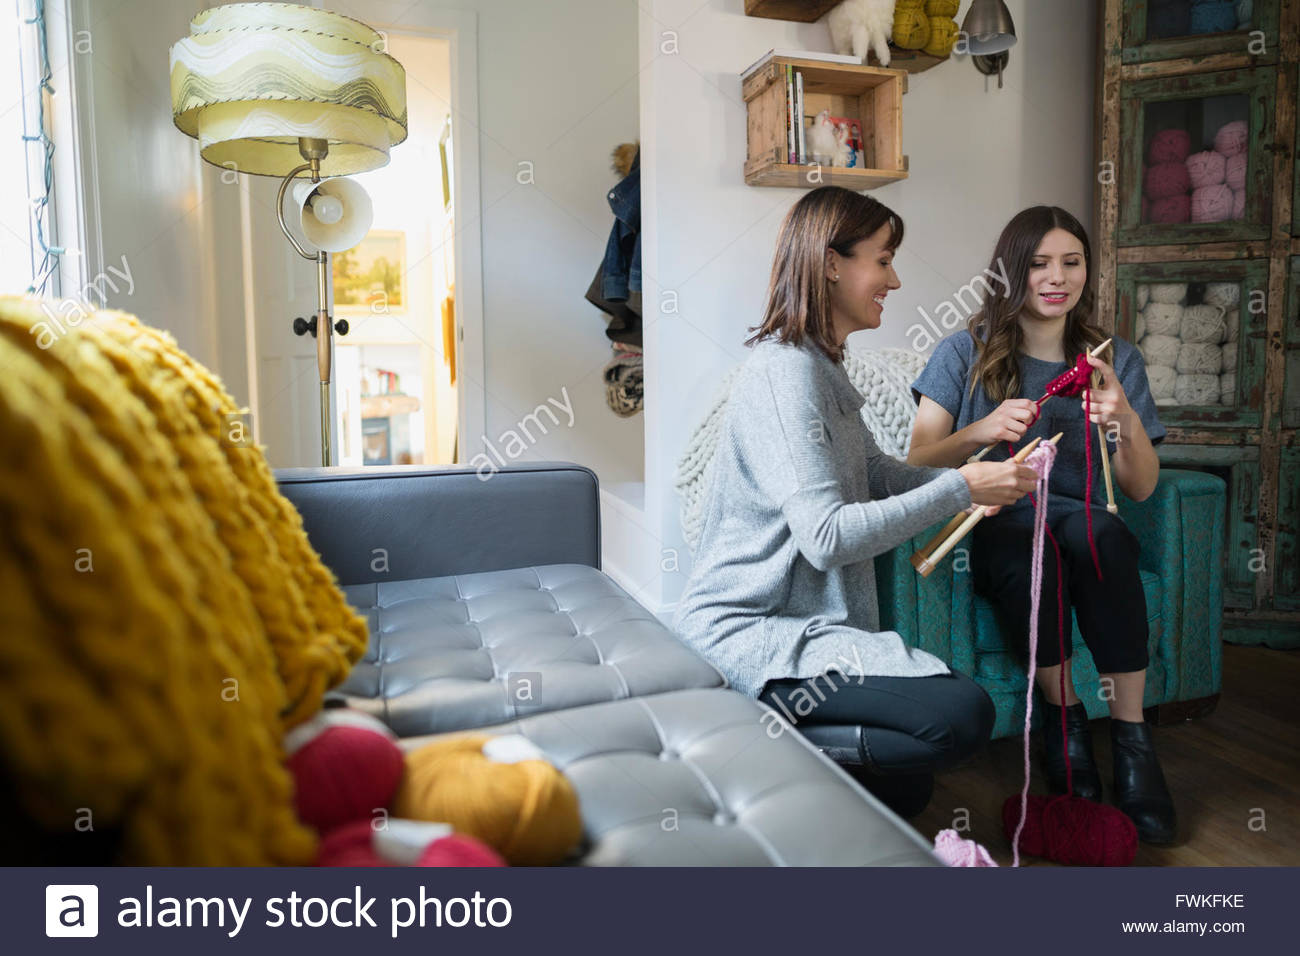 Women learning knitting at yarn store Stock Photo